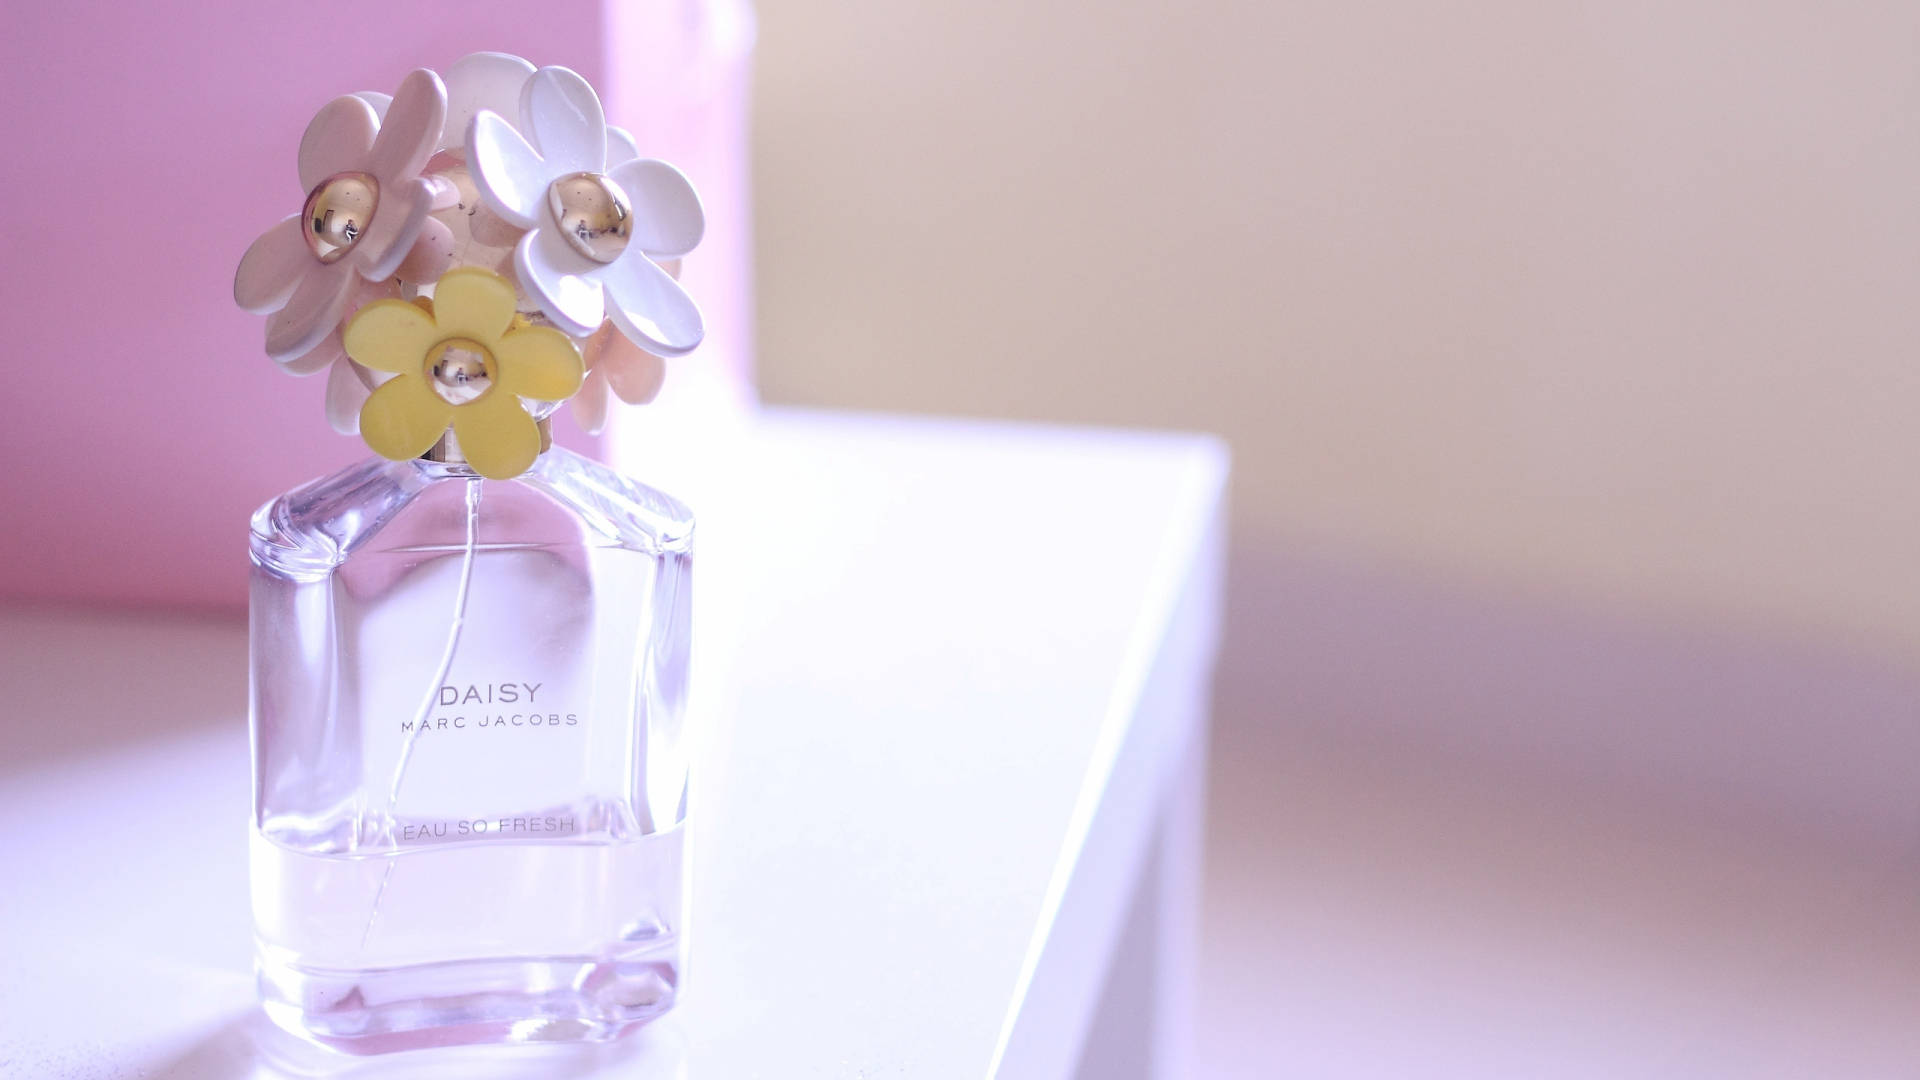 Marc Jacobs Daisy Perfume Bottle Background